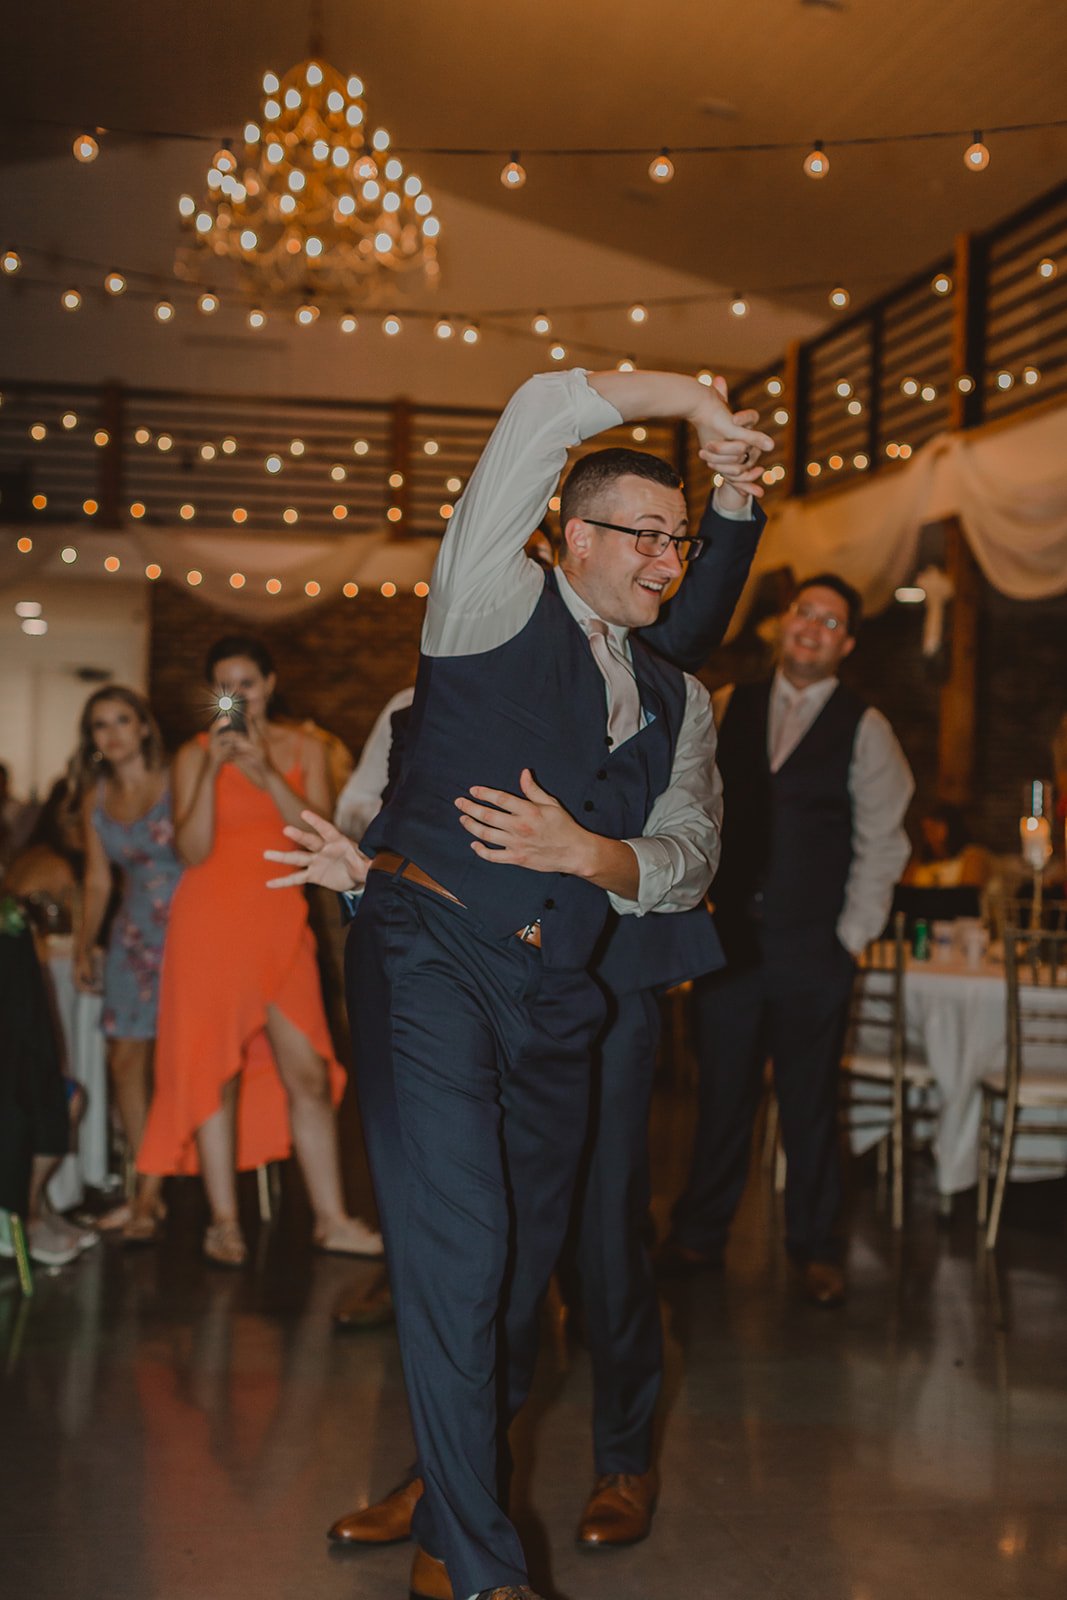 fun indoor summer wedding reception dancing (1).jpg